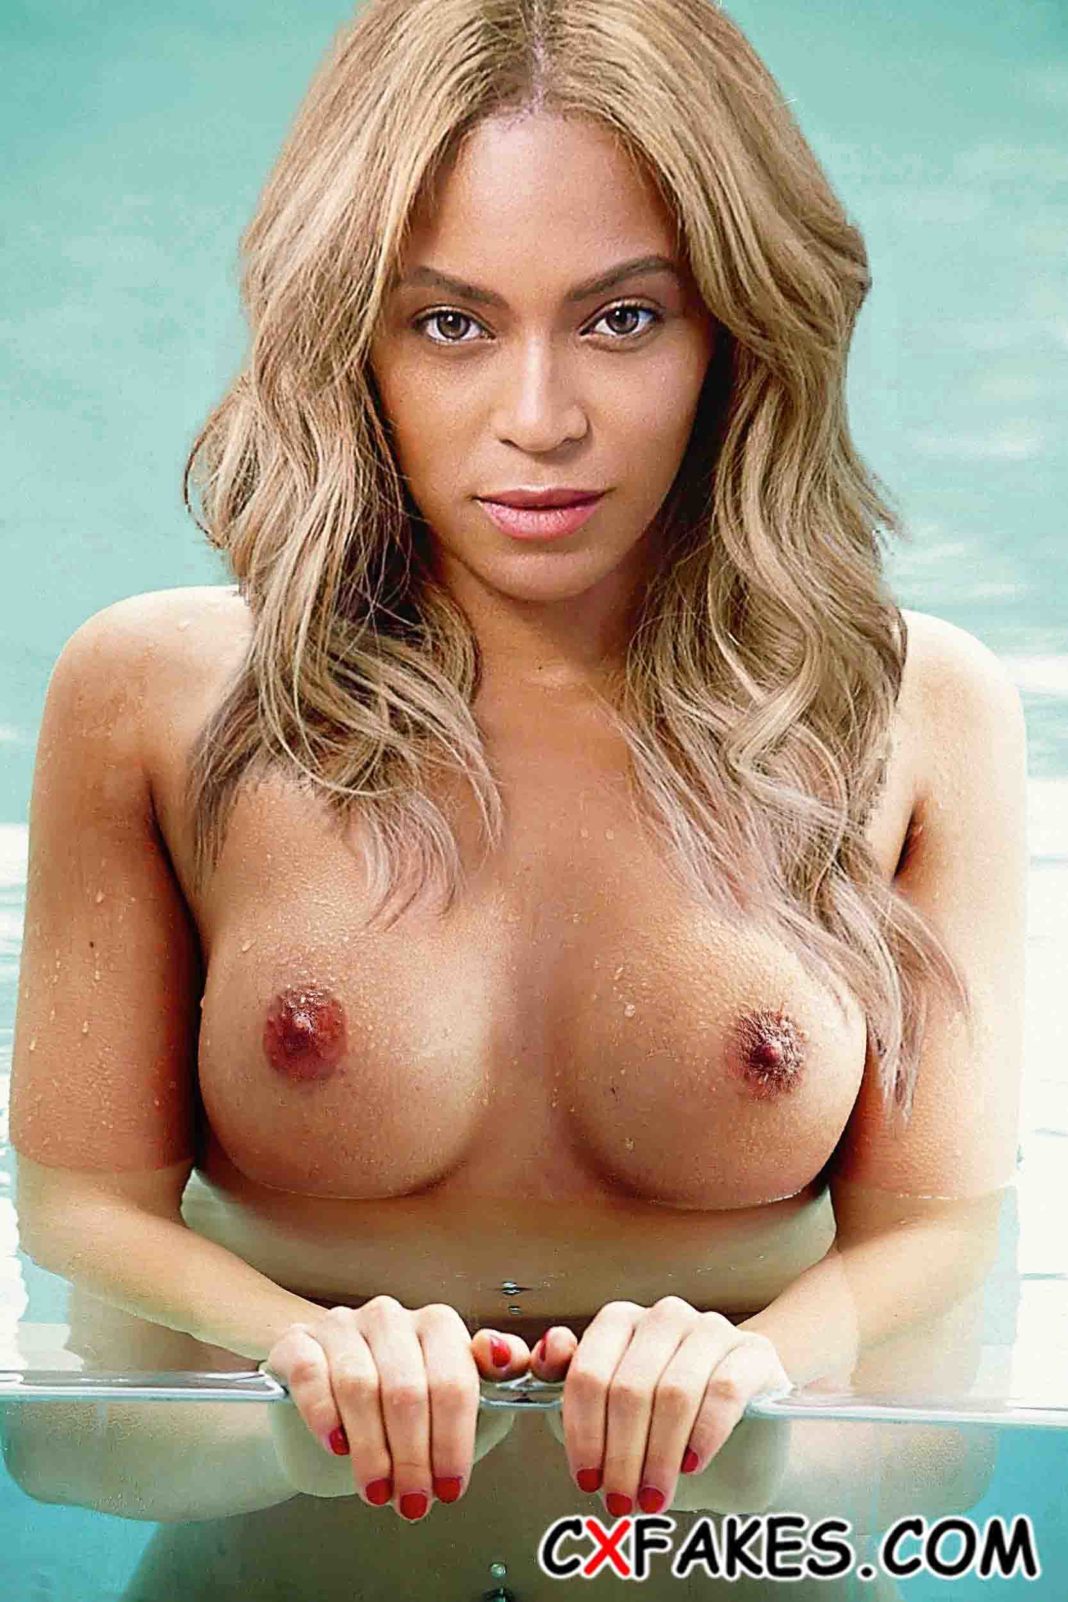 Beyonce Topless Photo Leaked CXFAKES